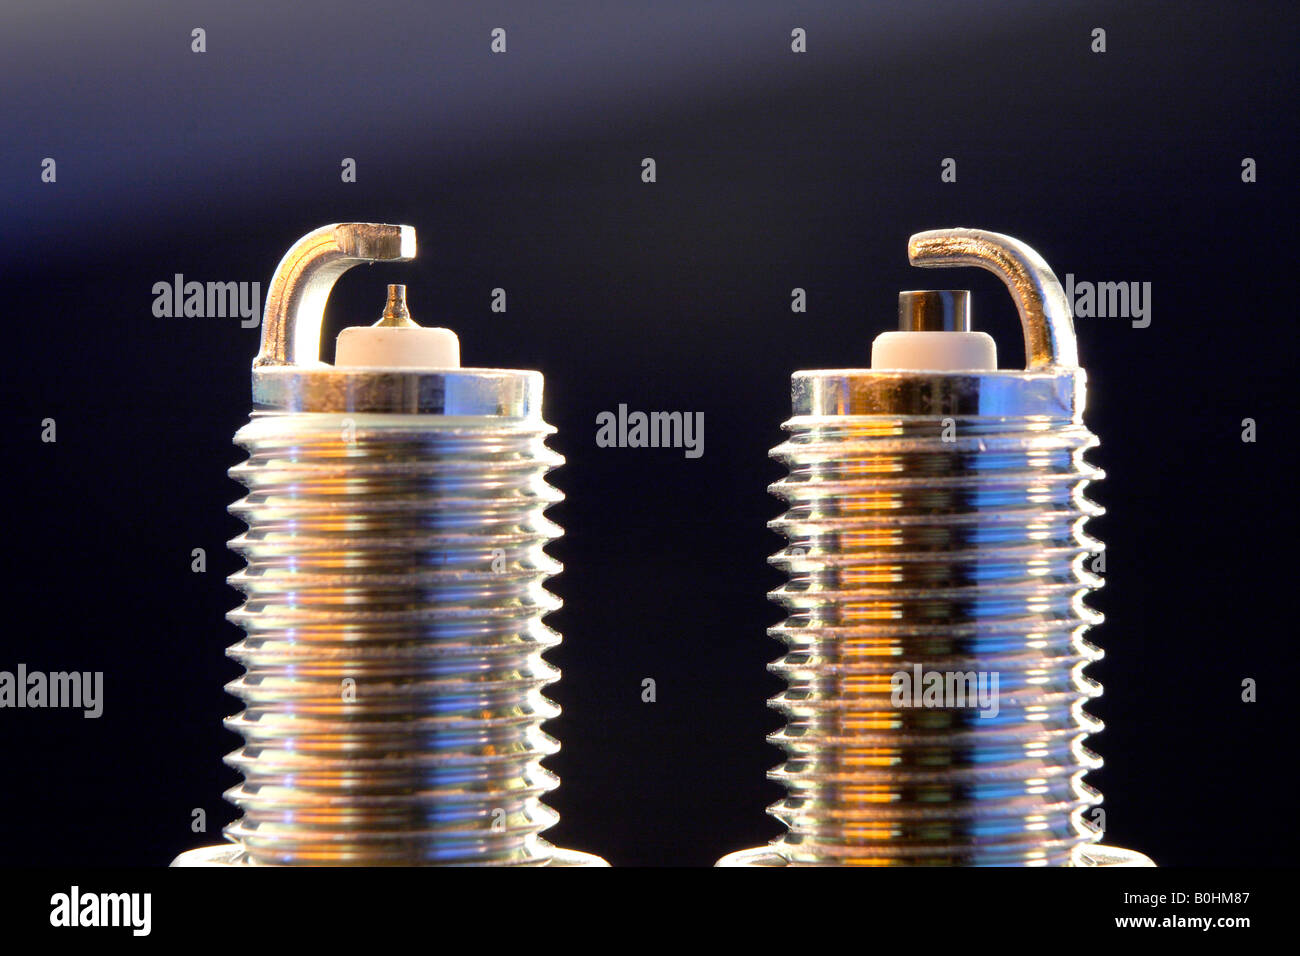 Comparaison des bougies Iridium et bougie standard Photo Stock - Alamy